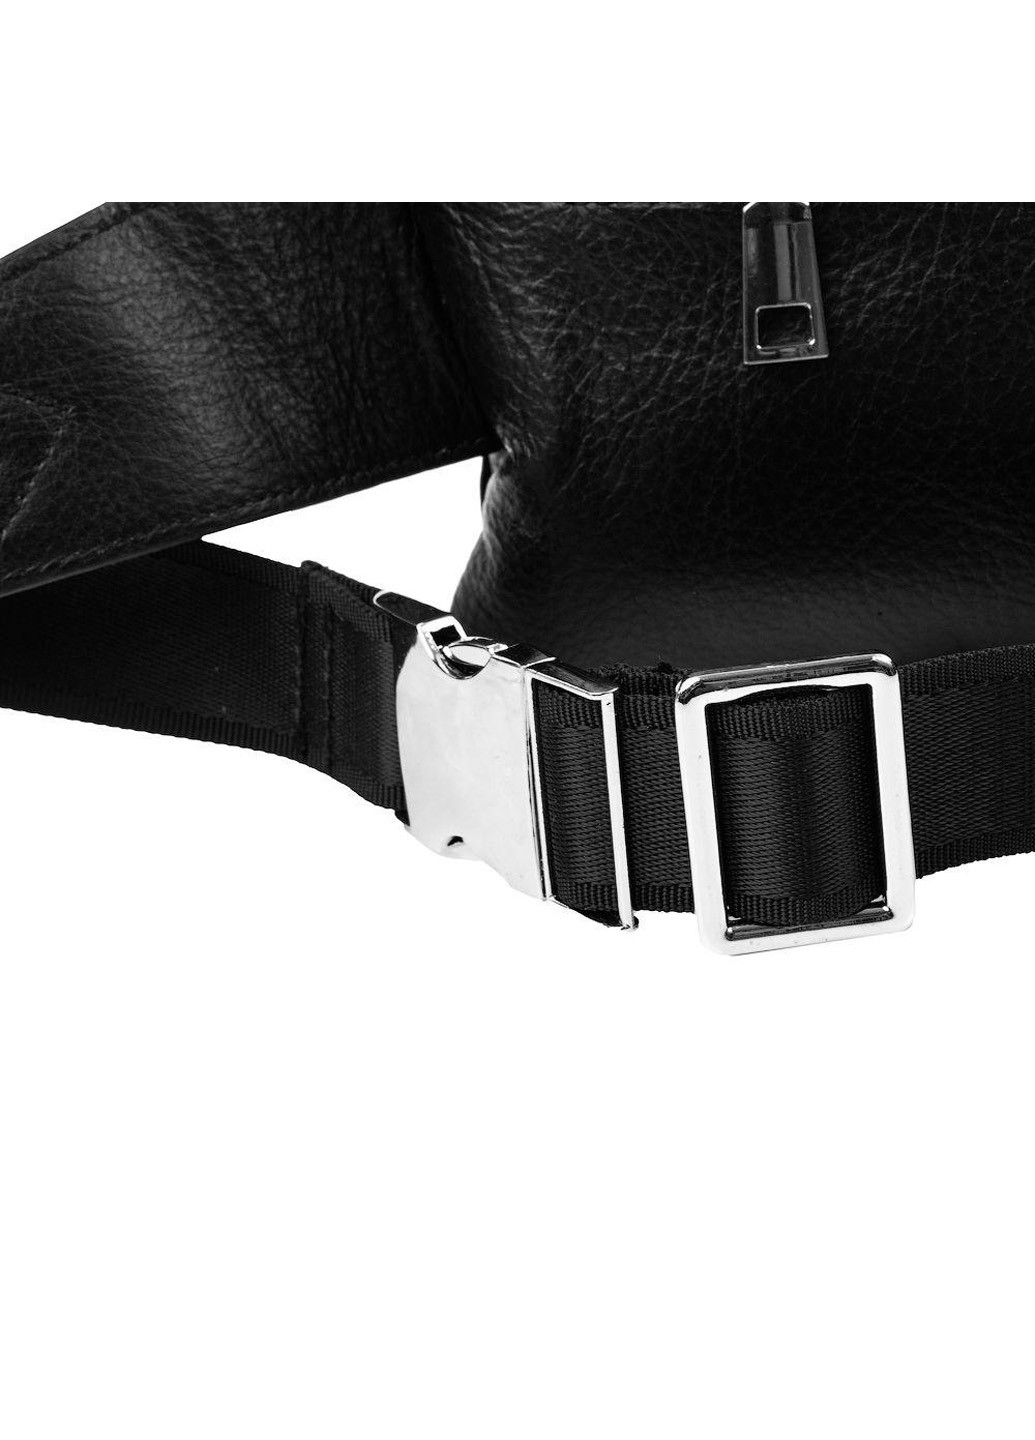 Женская кожаная поясная сумка 23х13х4,5 см Valiria Fashion (205132251)